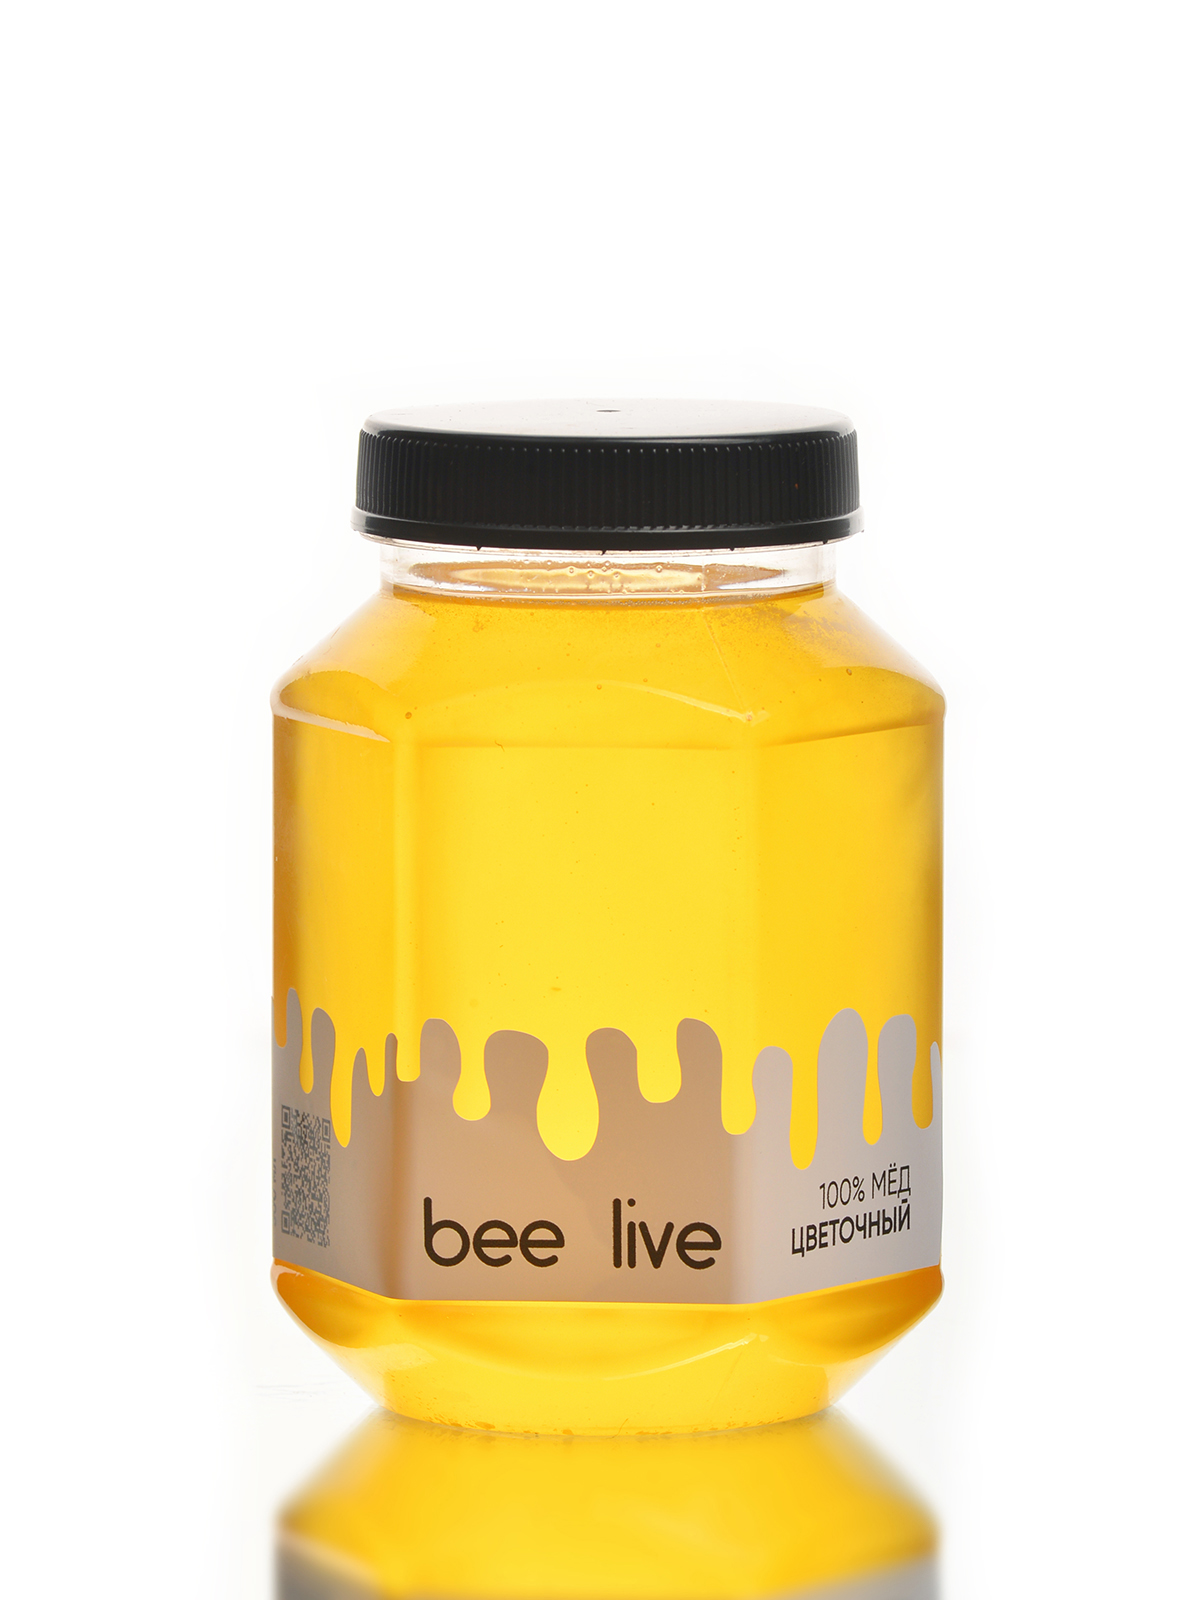 Цветочный мёд Bee live алтайский, 700 г